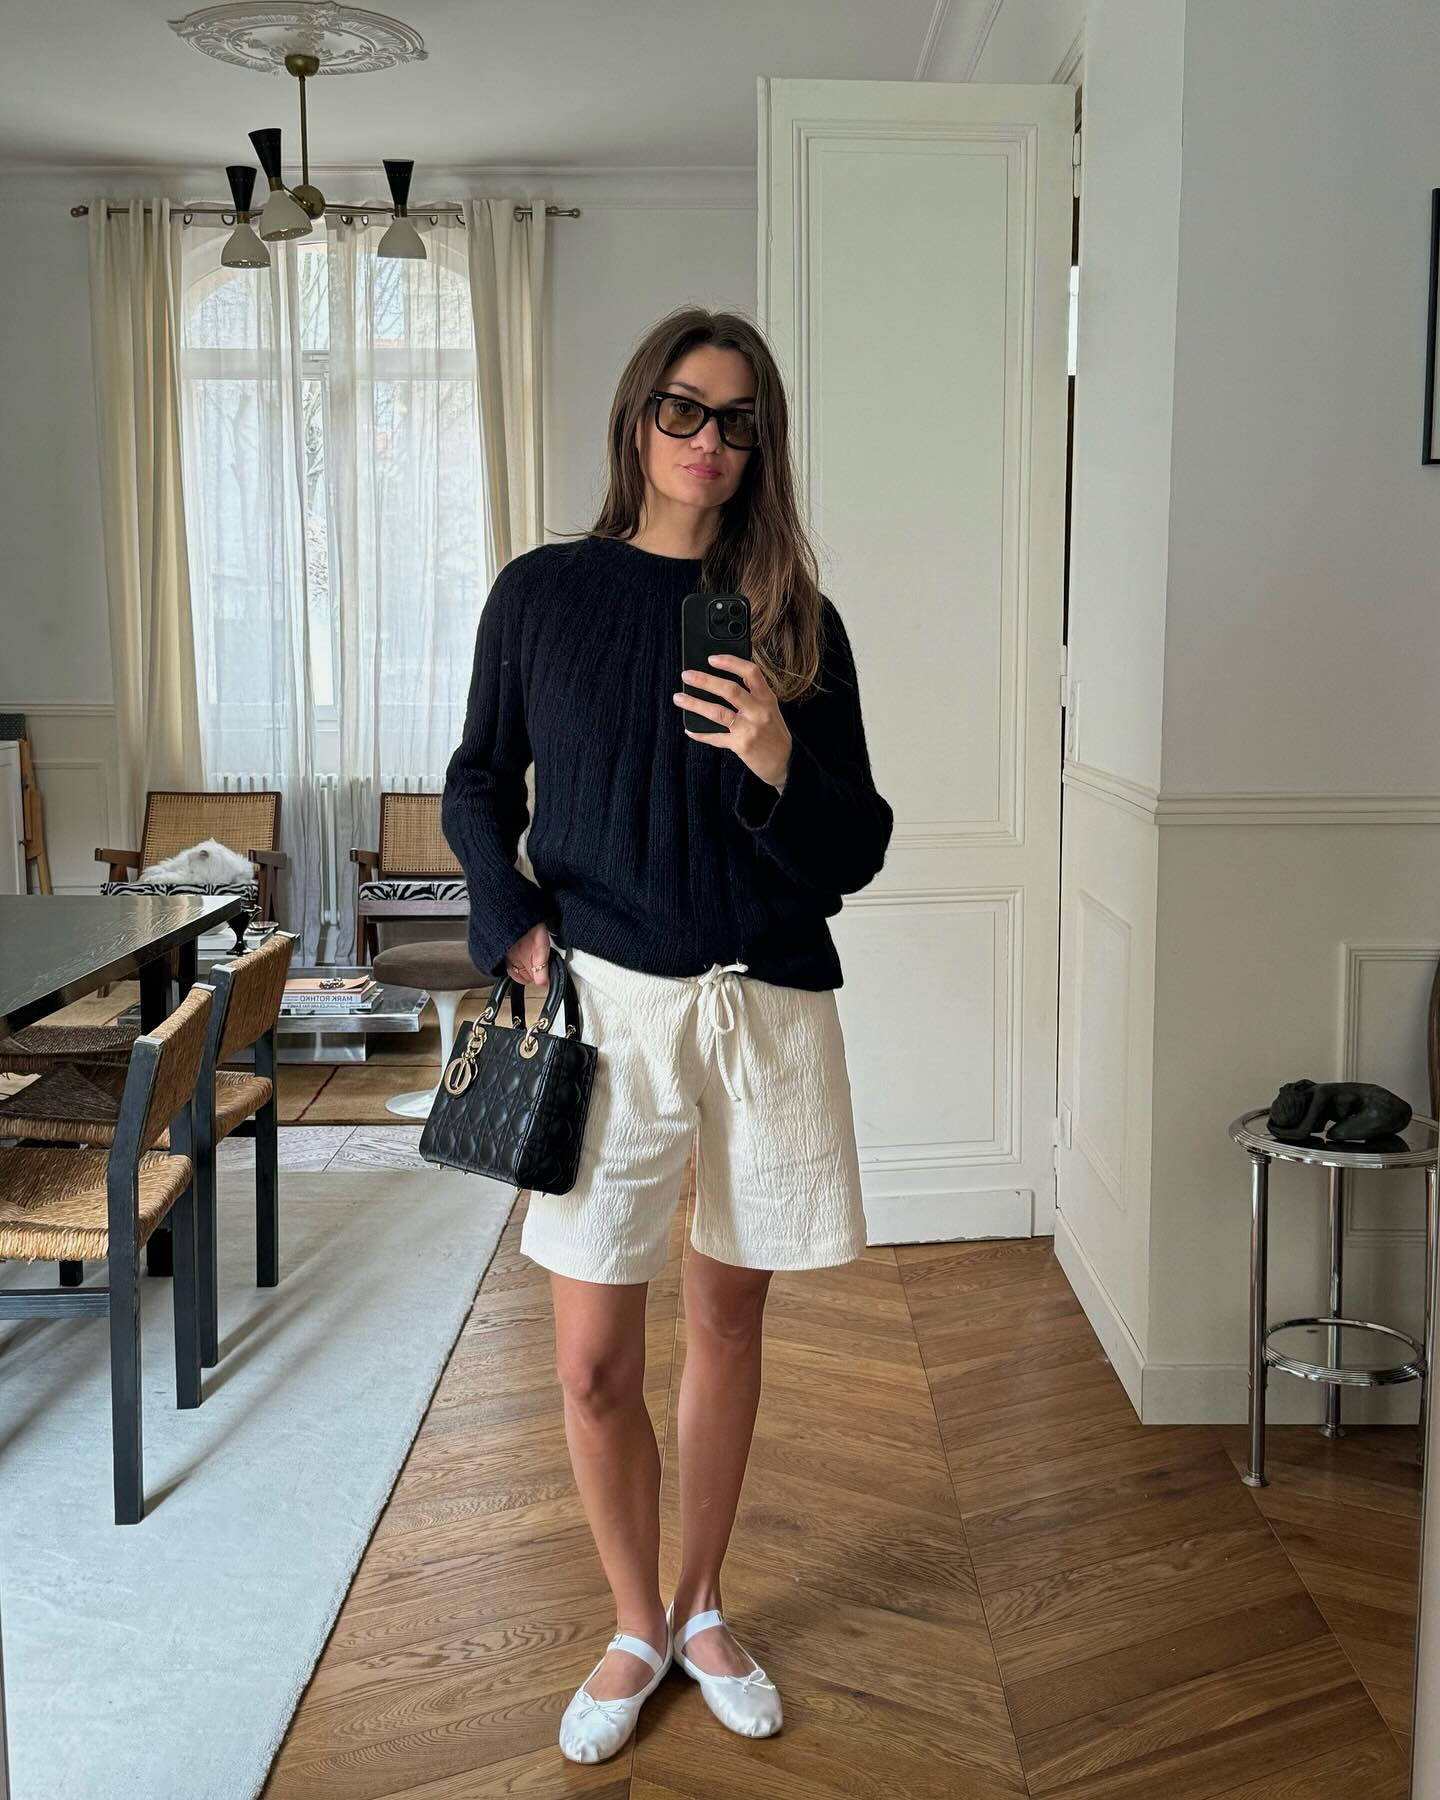 French fashion influencer Anne Laure Mais takes a mirror selfie wearing black sunglasses, a black sweater, mini Dior bag, textured drawstring white shorts, and white Miu Miu satin ballerina flats